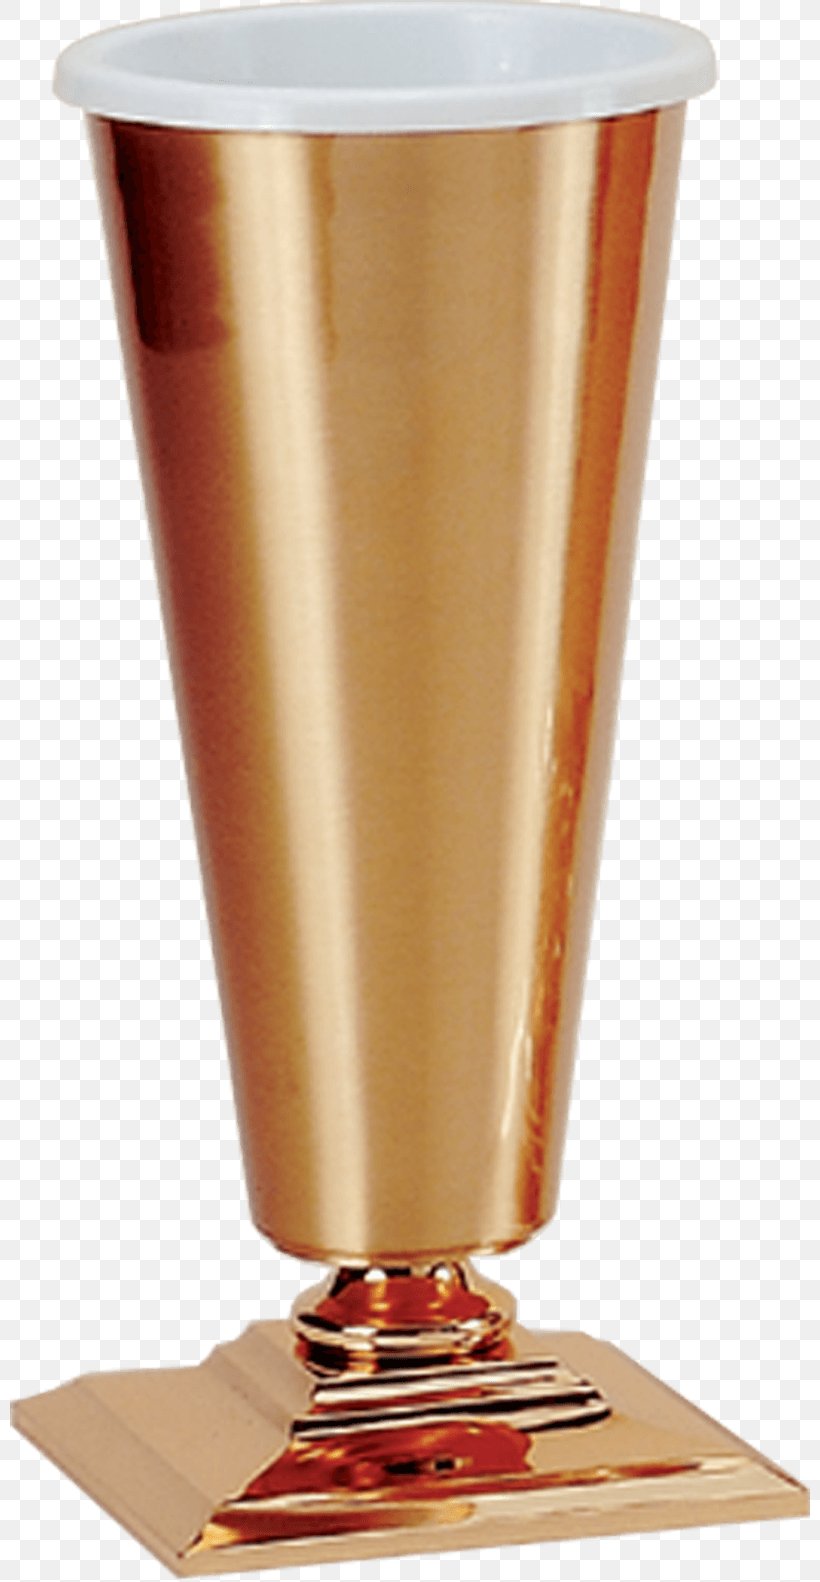 Beer Glasses Vase, PNG, 800x1582px, Beer Glasses, Beer Glass, Cup, Glass, Vase Download Free